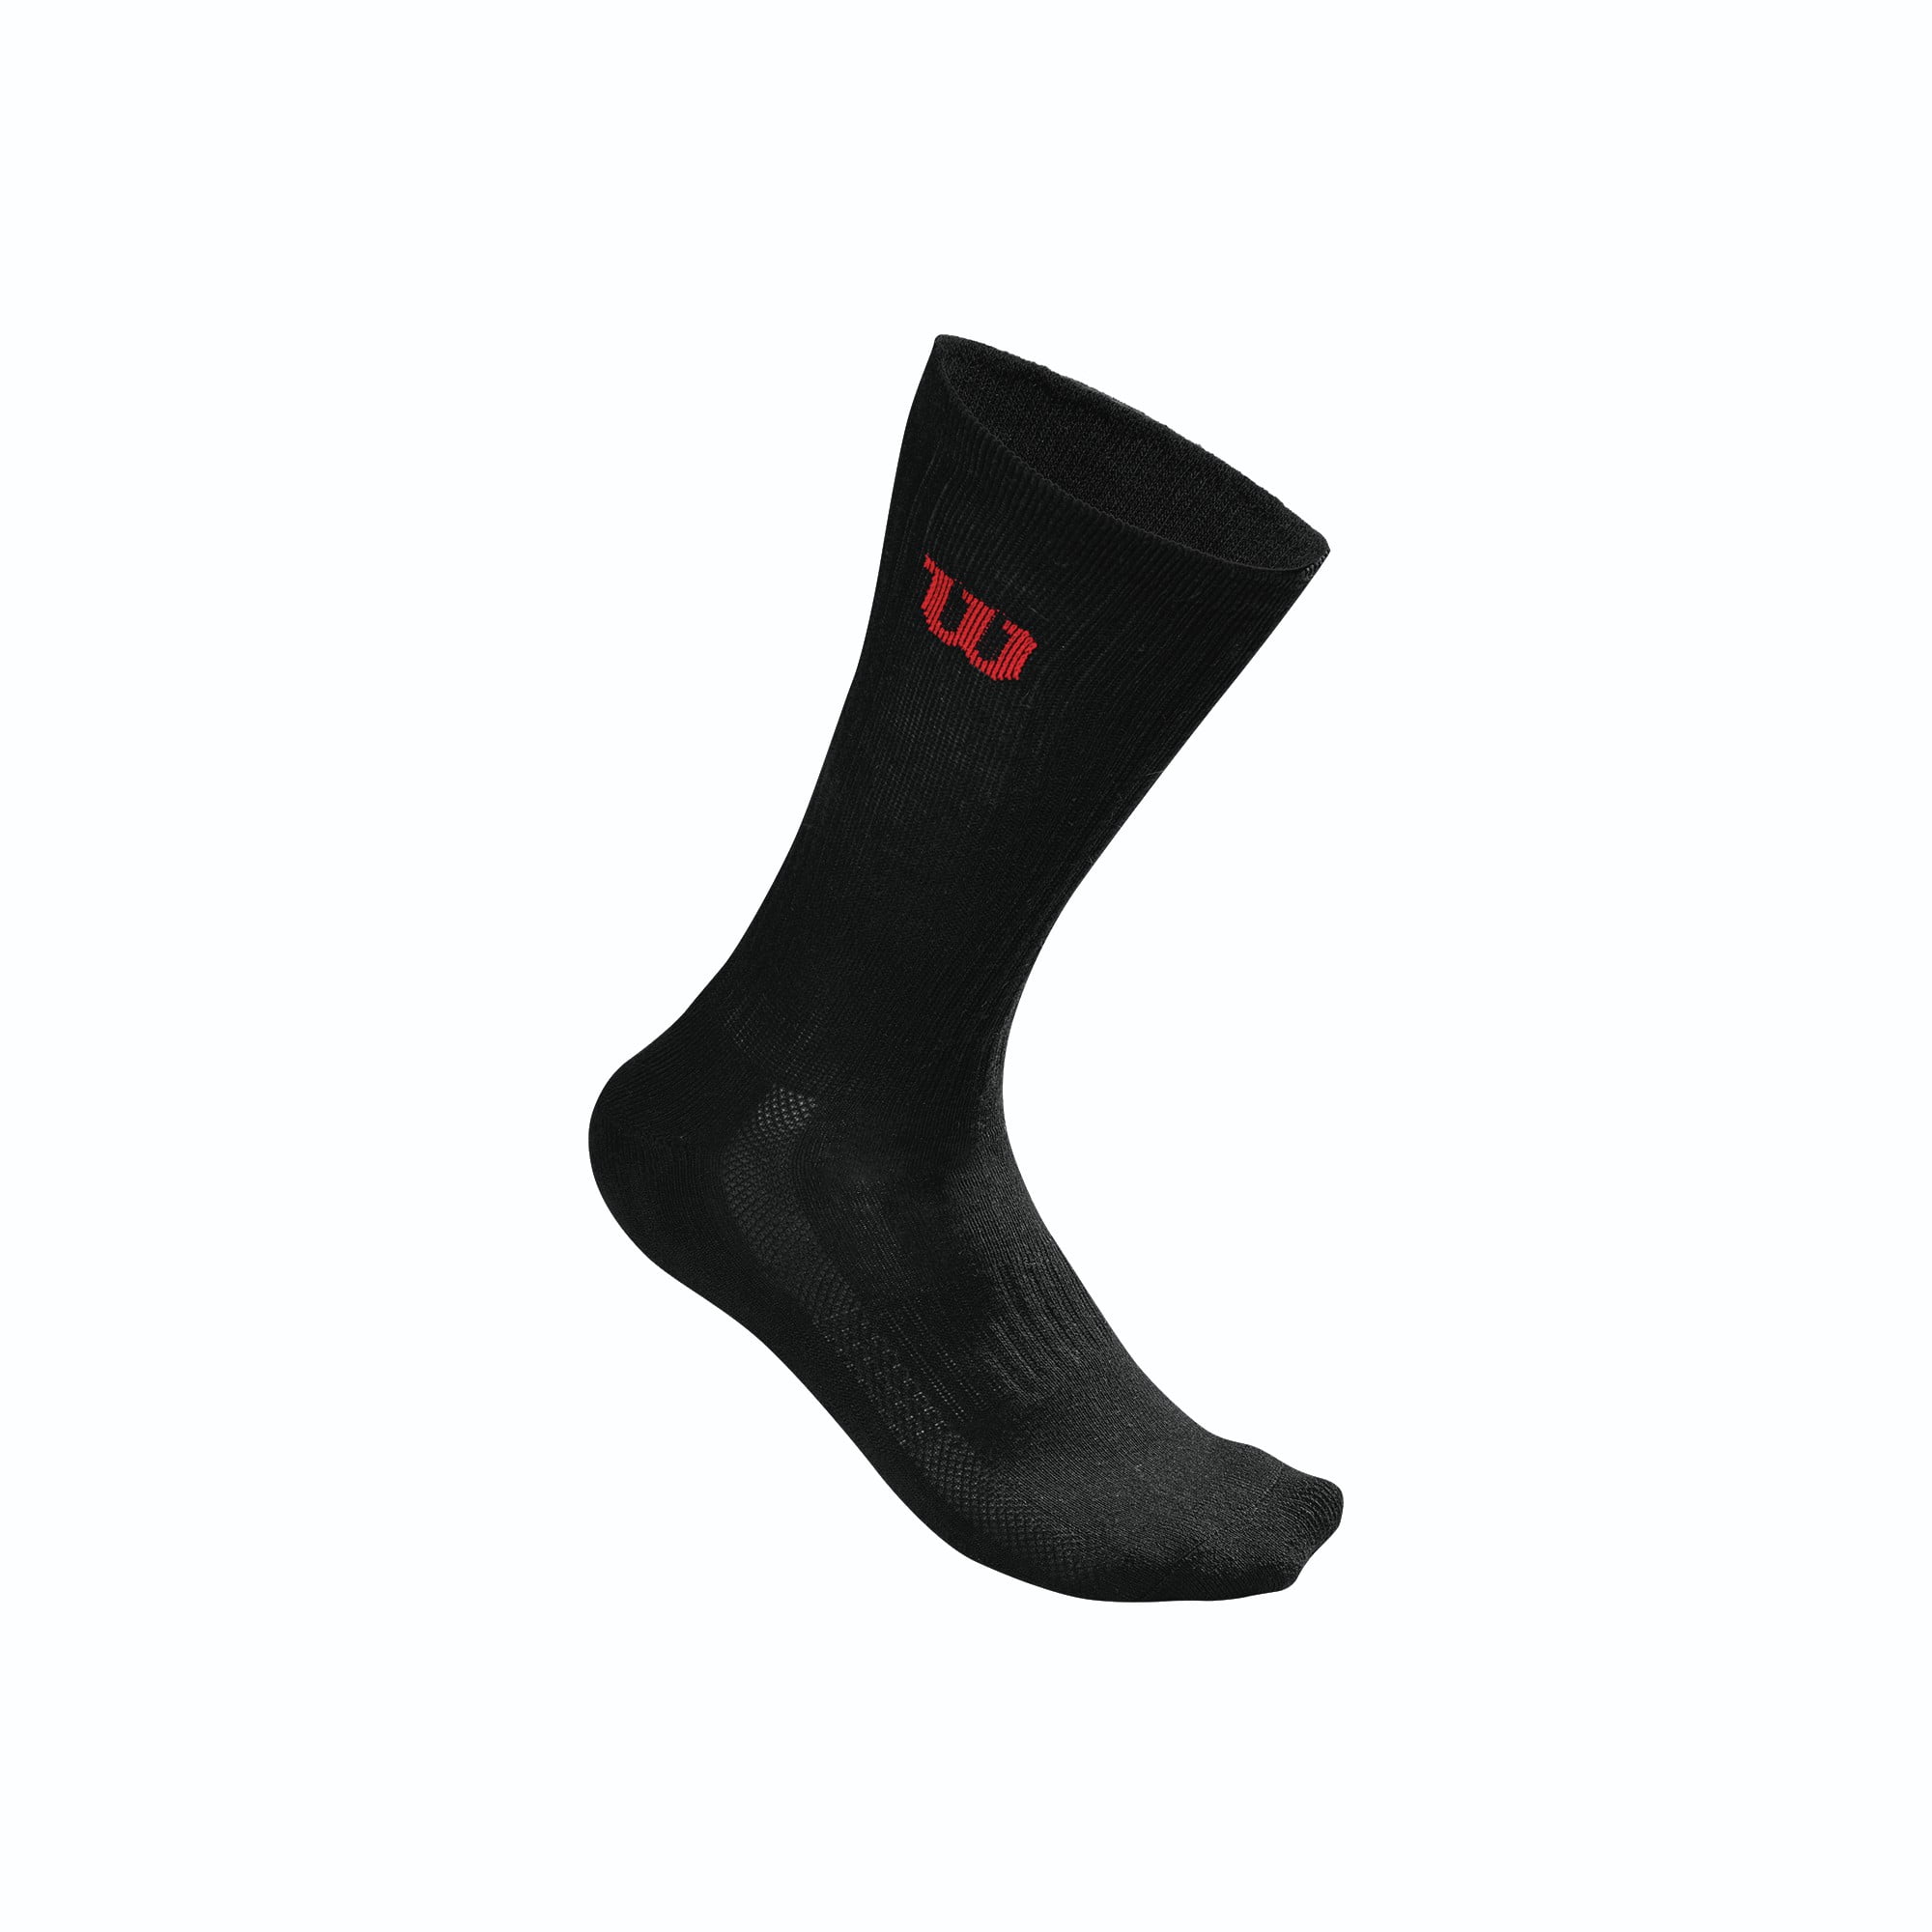 Wilson Men's High End Crew Socks S/M Black/Red/Grey 1-Pair Retail $15 6-9 